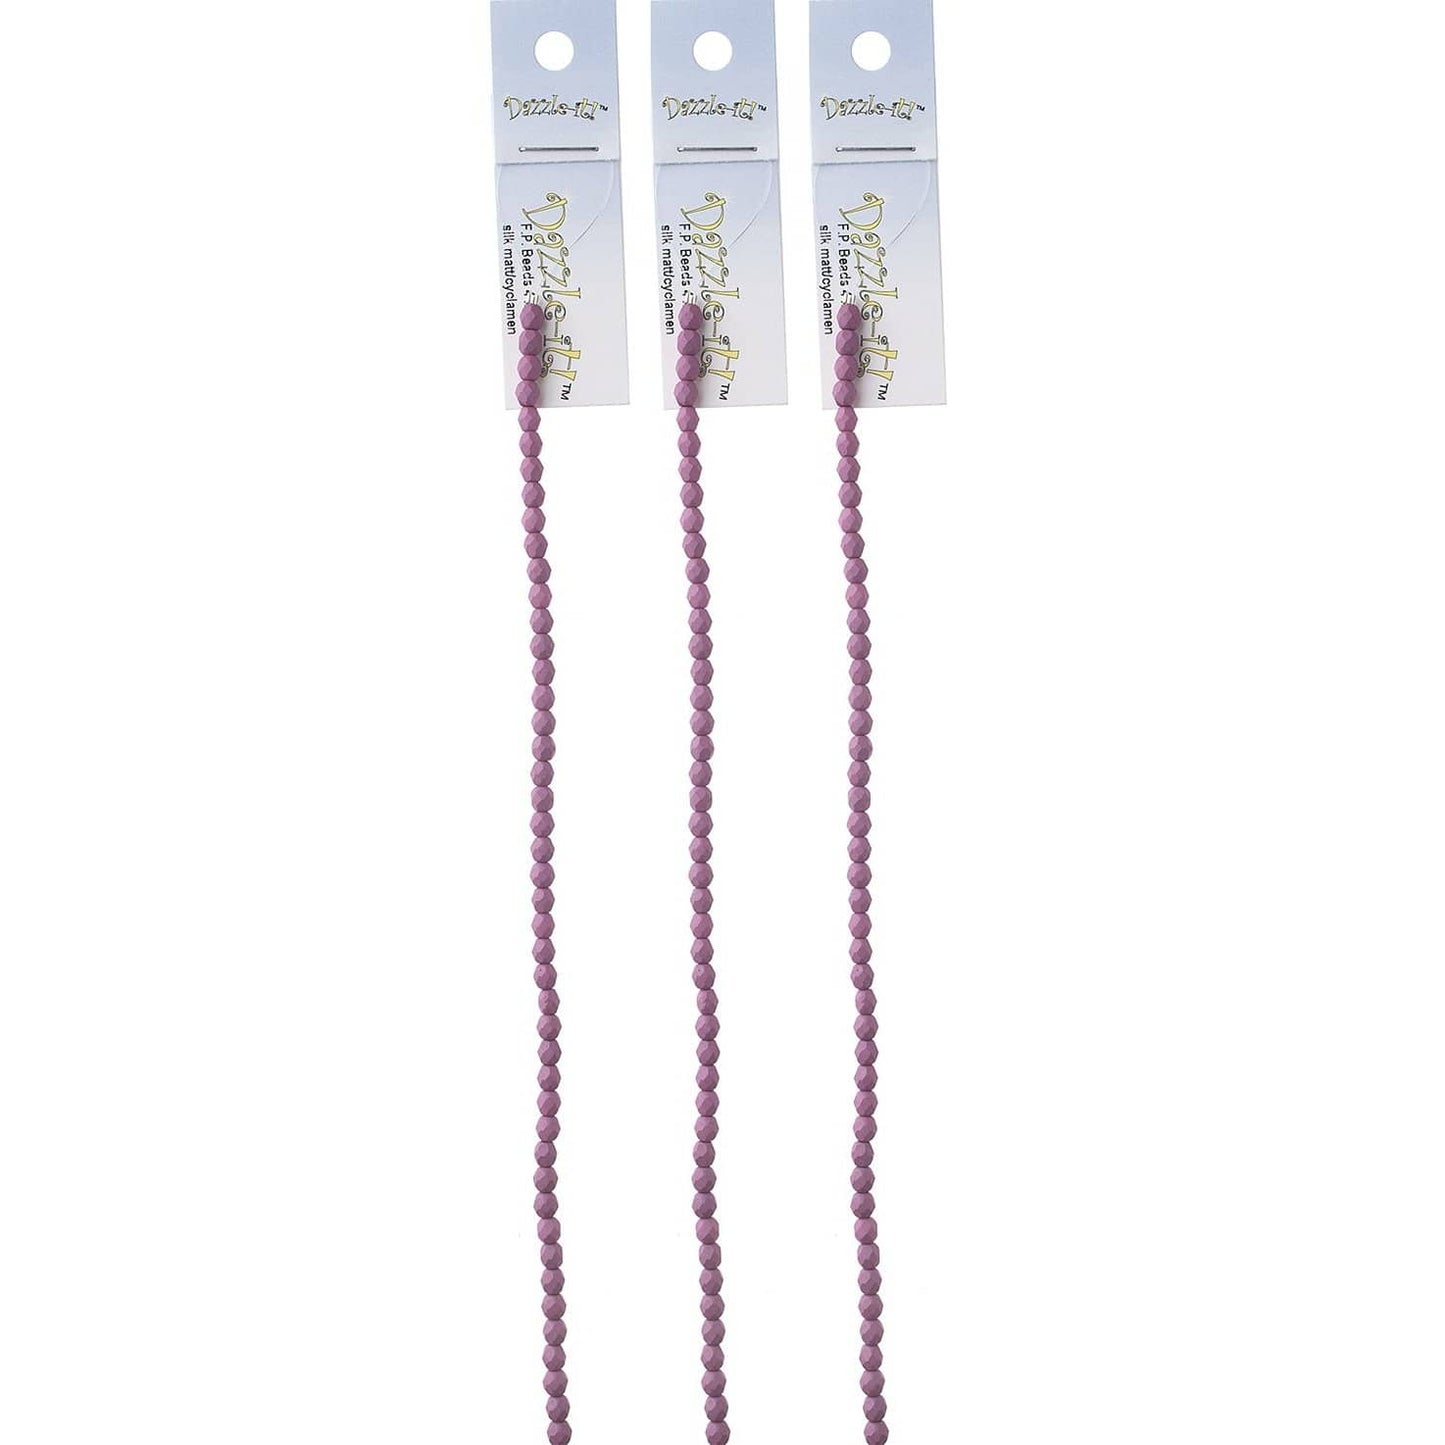 Sundaylace Creations & Bling Fire Polished Beads 4mm Silk Matte Cyclamen (Light Purple/pink), Fire Polished Beads strung